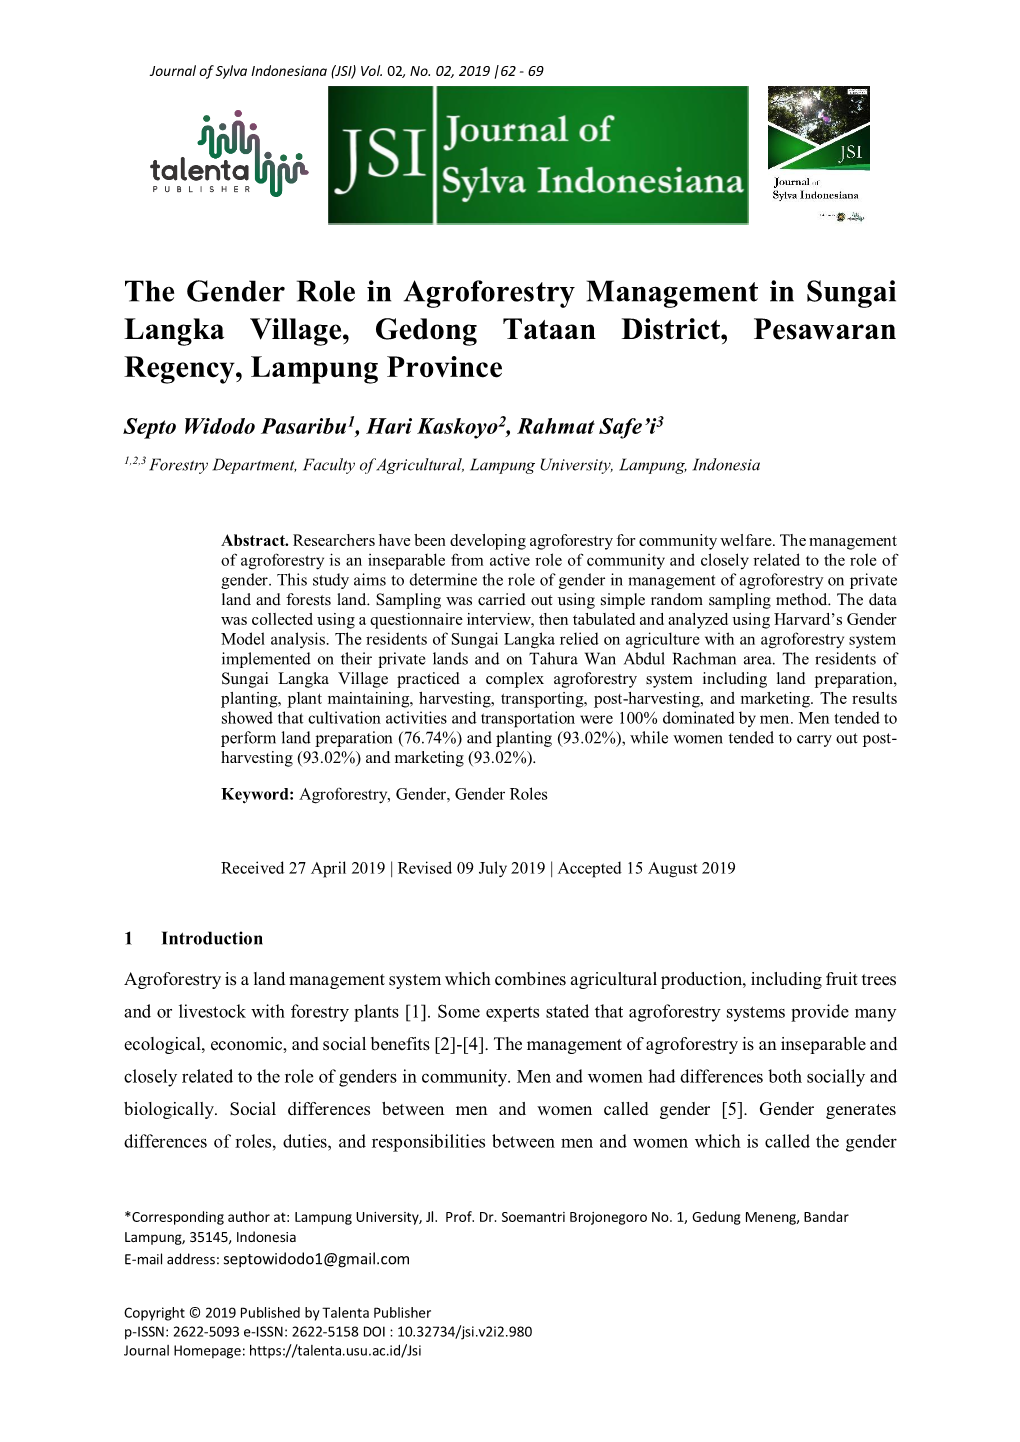 The Gender Role in Agroforestry Management in Sungai Langka Village, Gedong Tataan District, Pesawaran Regency, Lampung Province